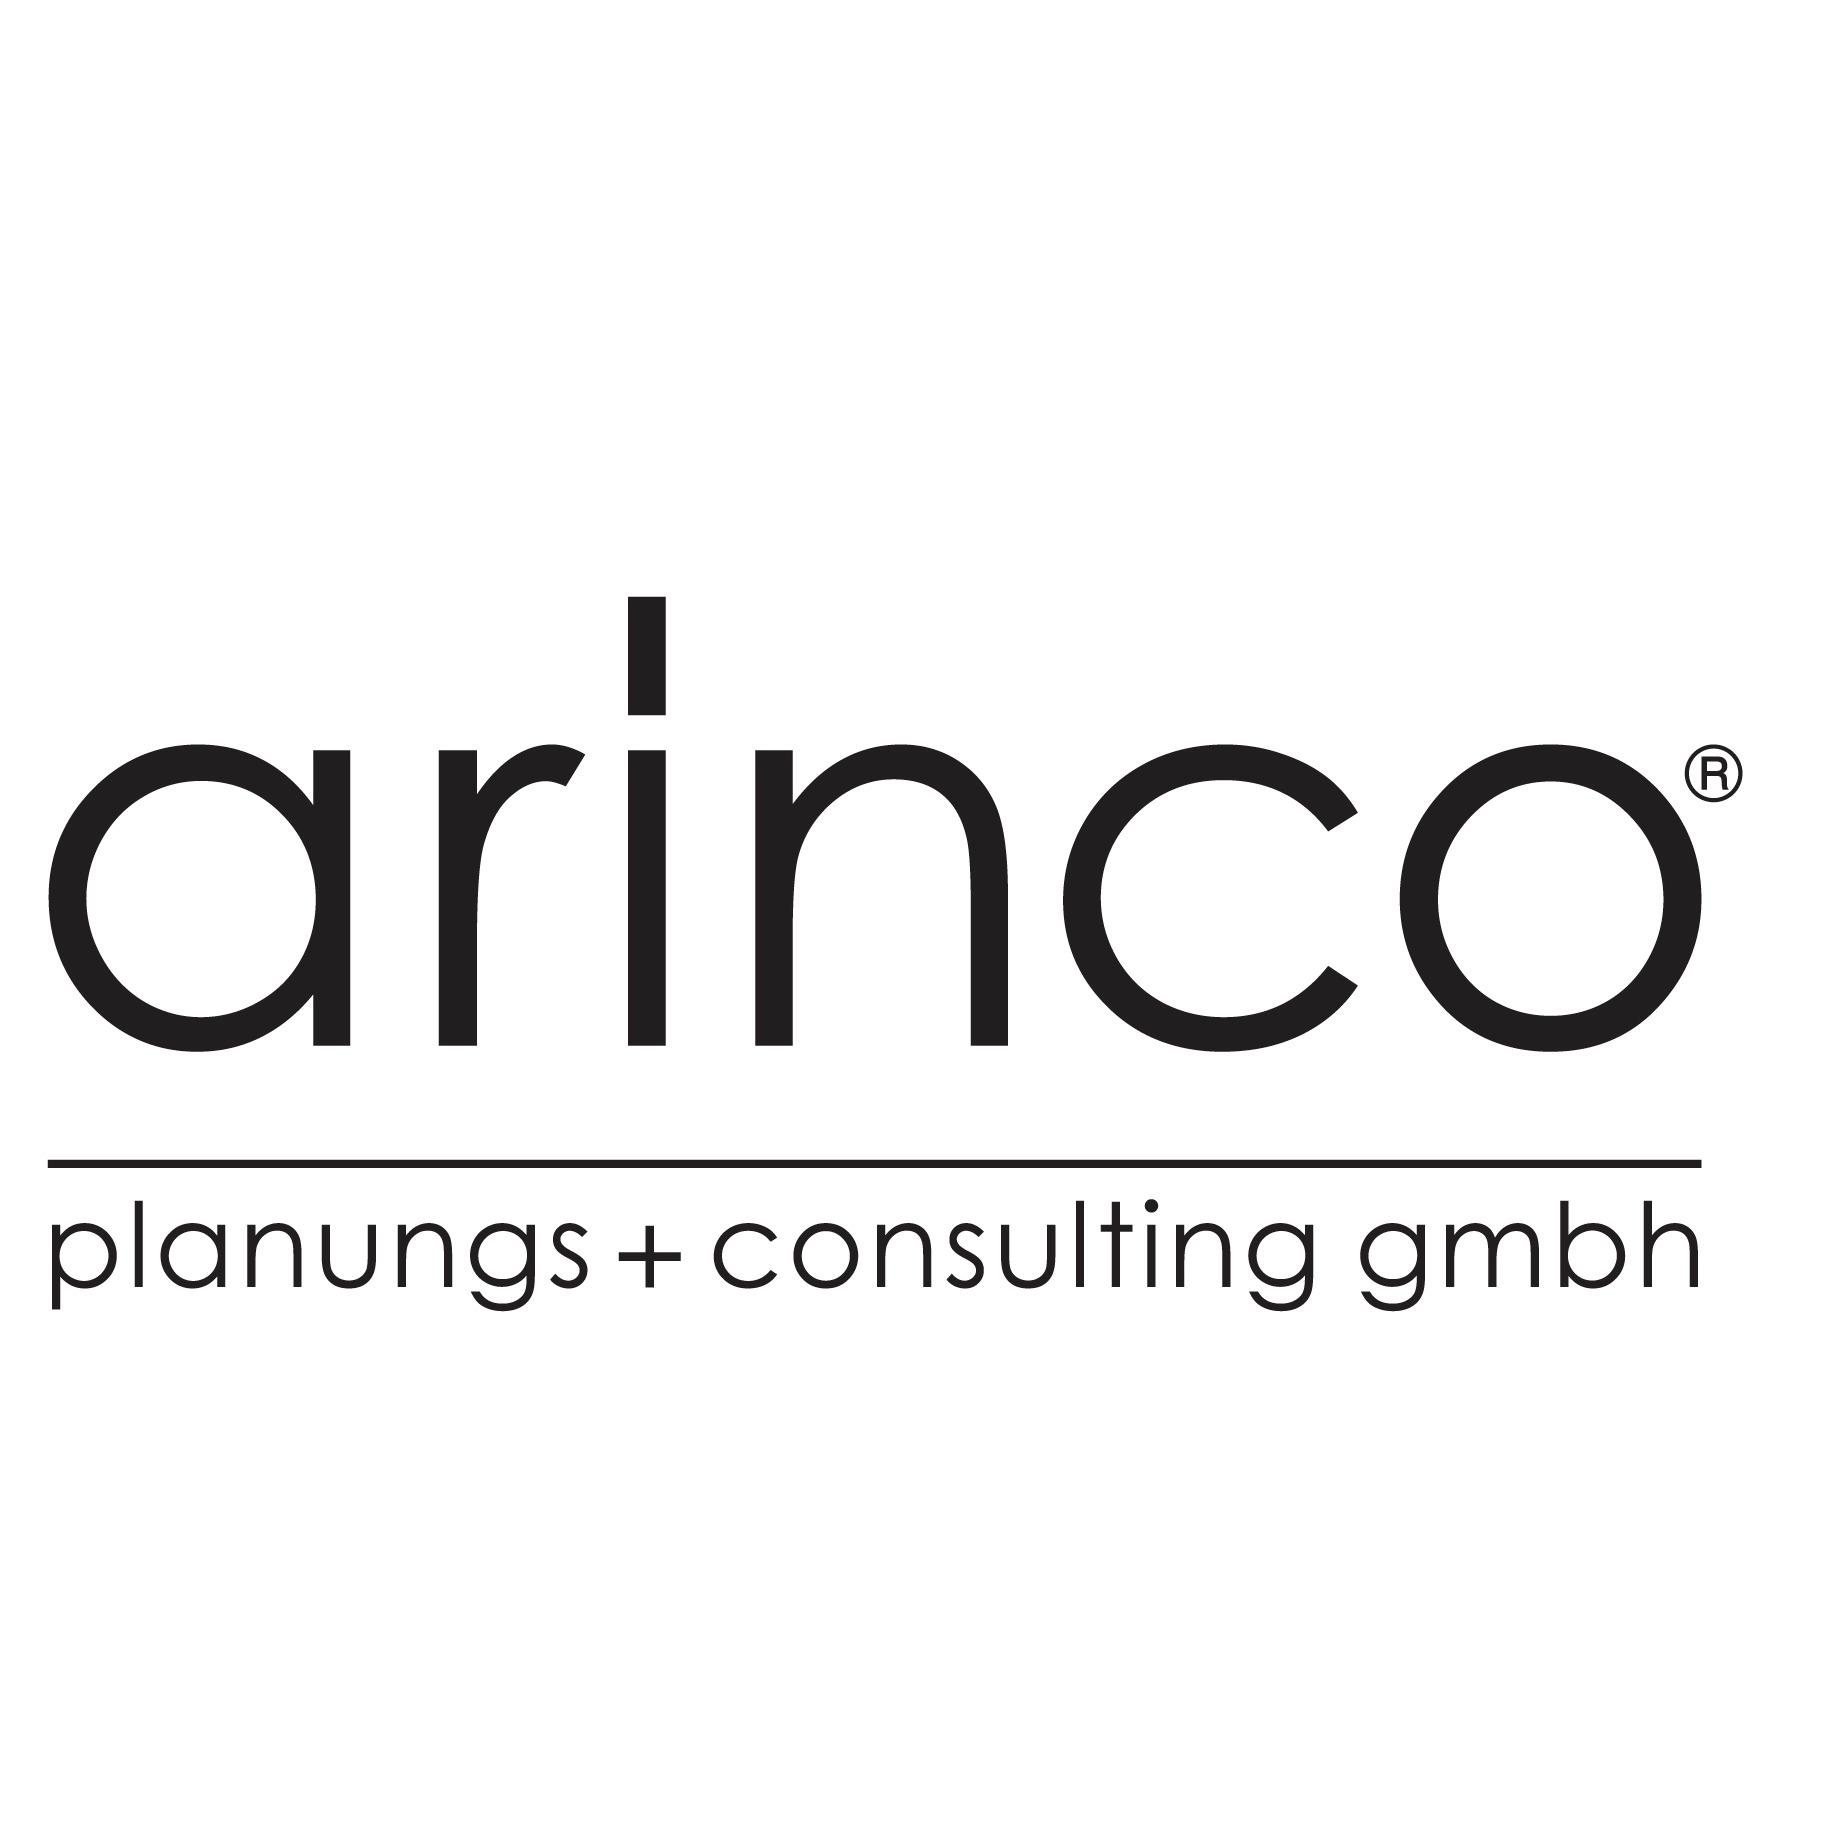 arinco planungs + consulting gmbh Logo